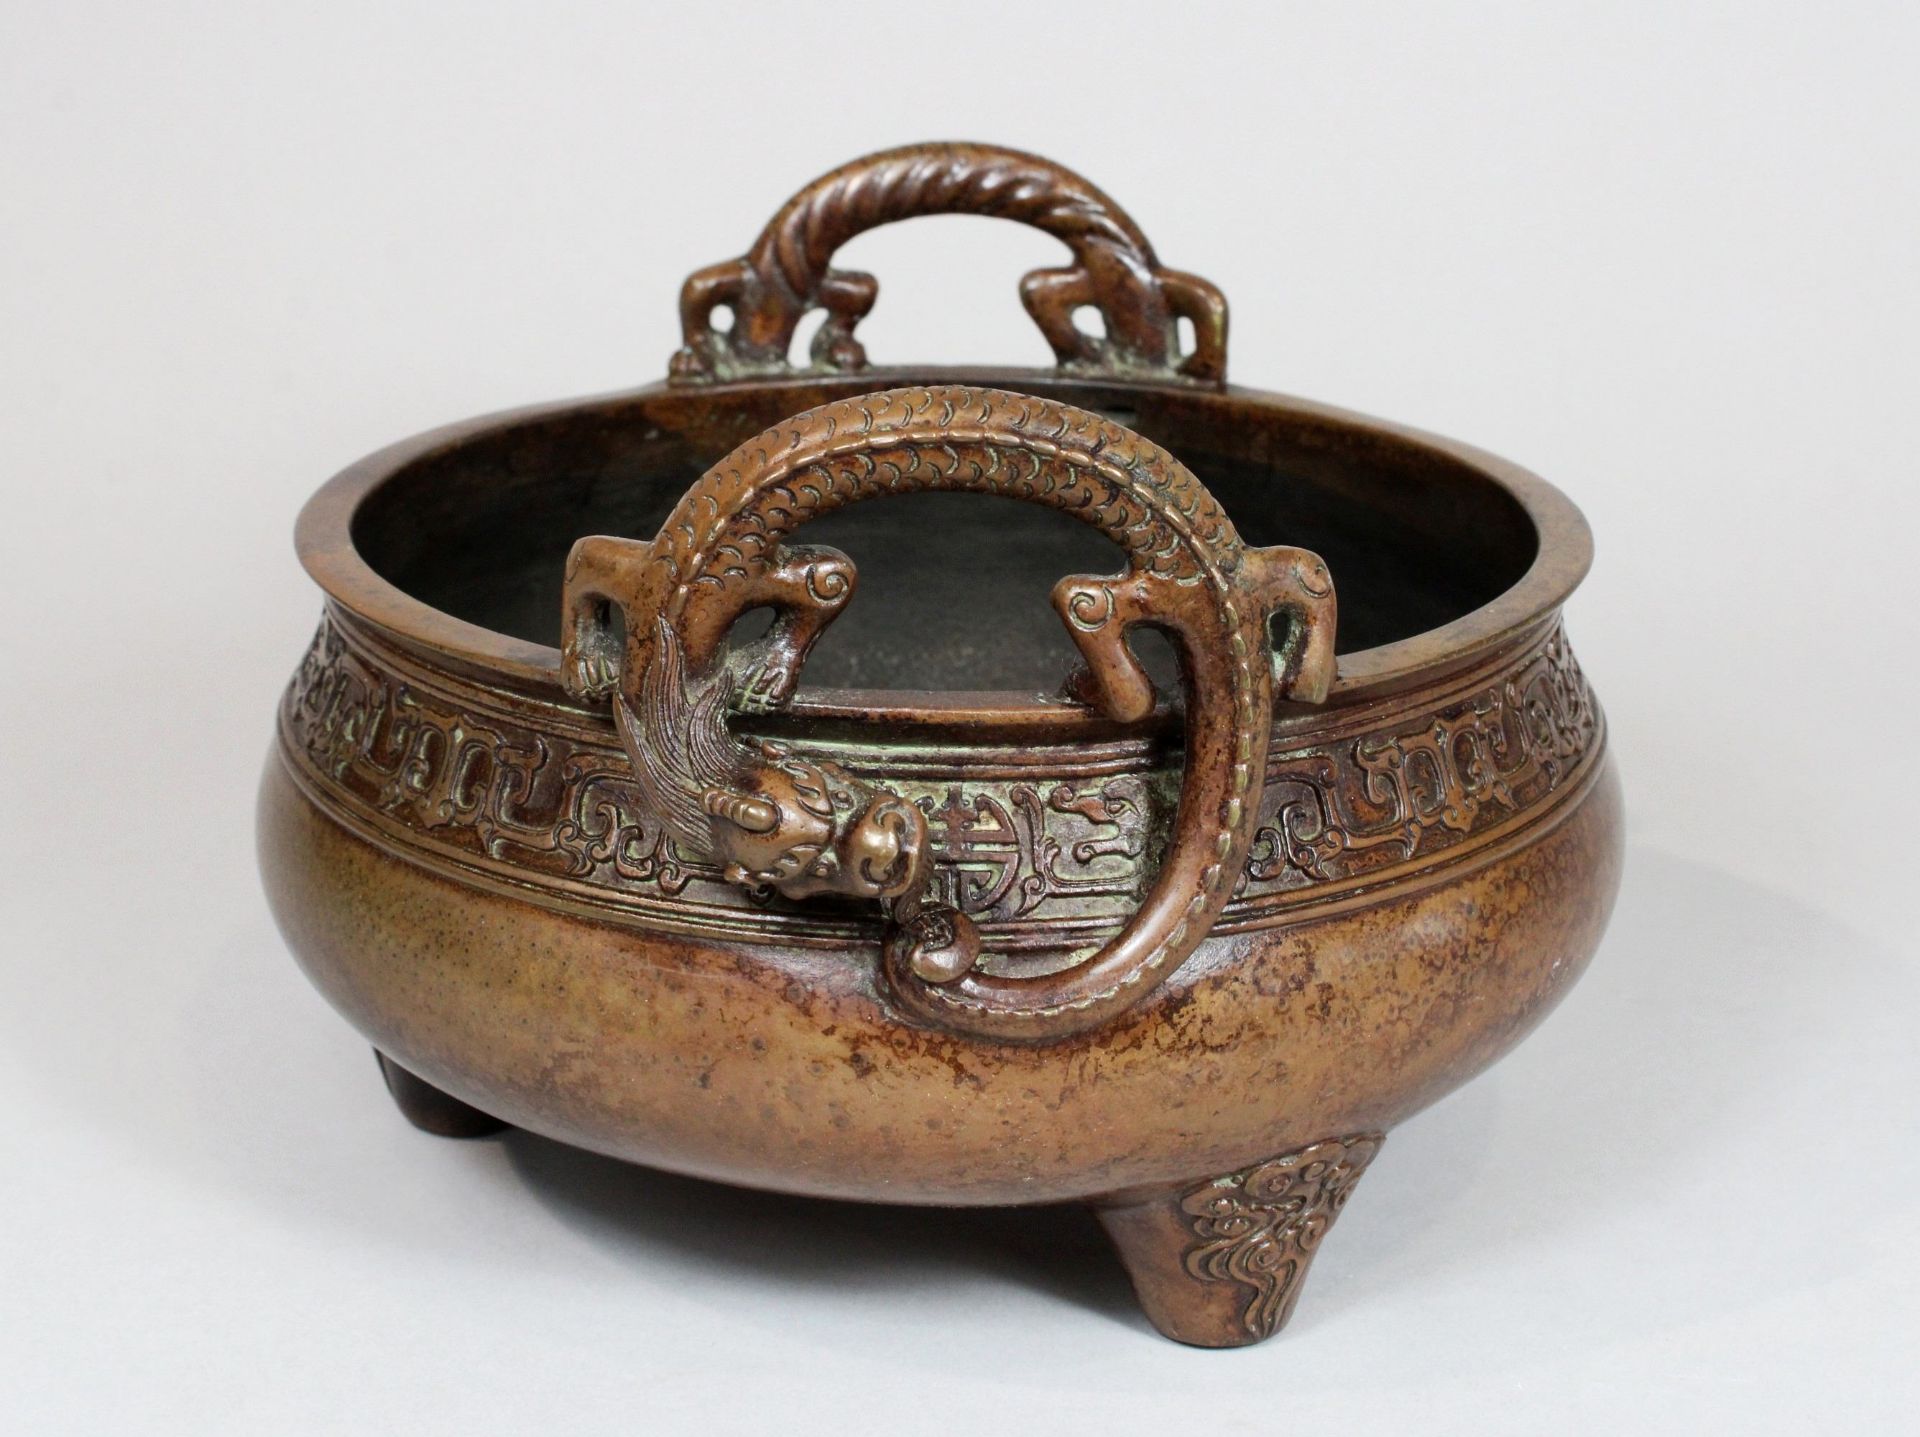 Weihrauchgefäß, China, Bronze, Marke: Da Ming Xuan De Nian Zhi, mit Drachen-Henkeln, Dm.: 16,7 cm, - Image 2 of 3